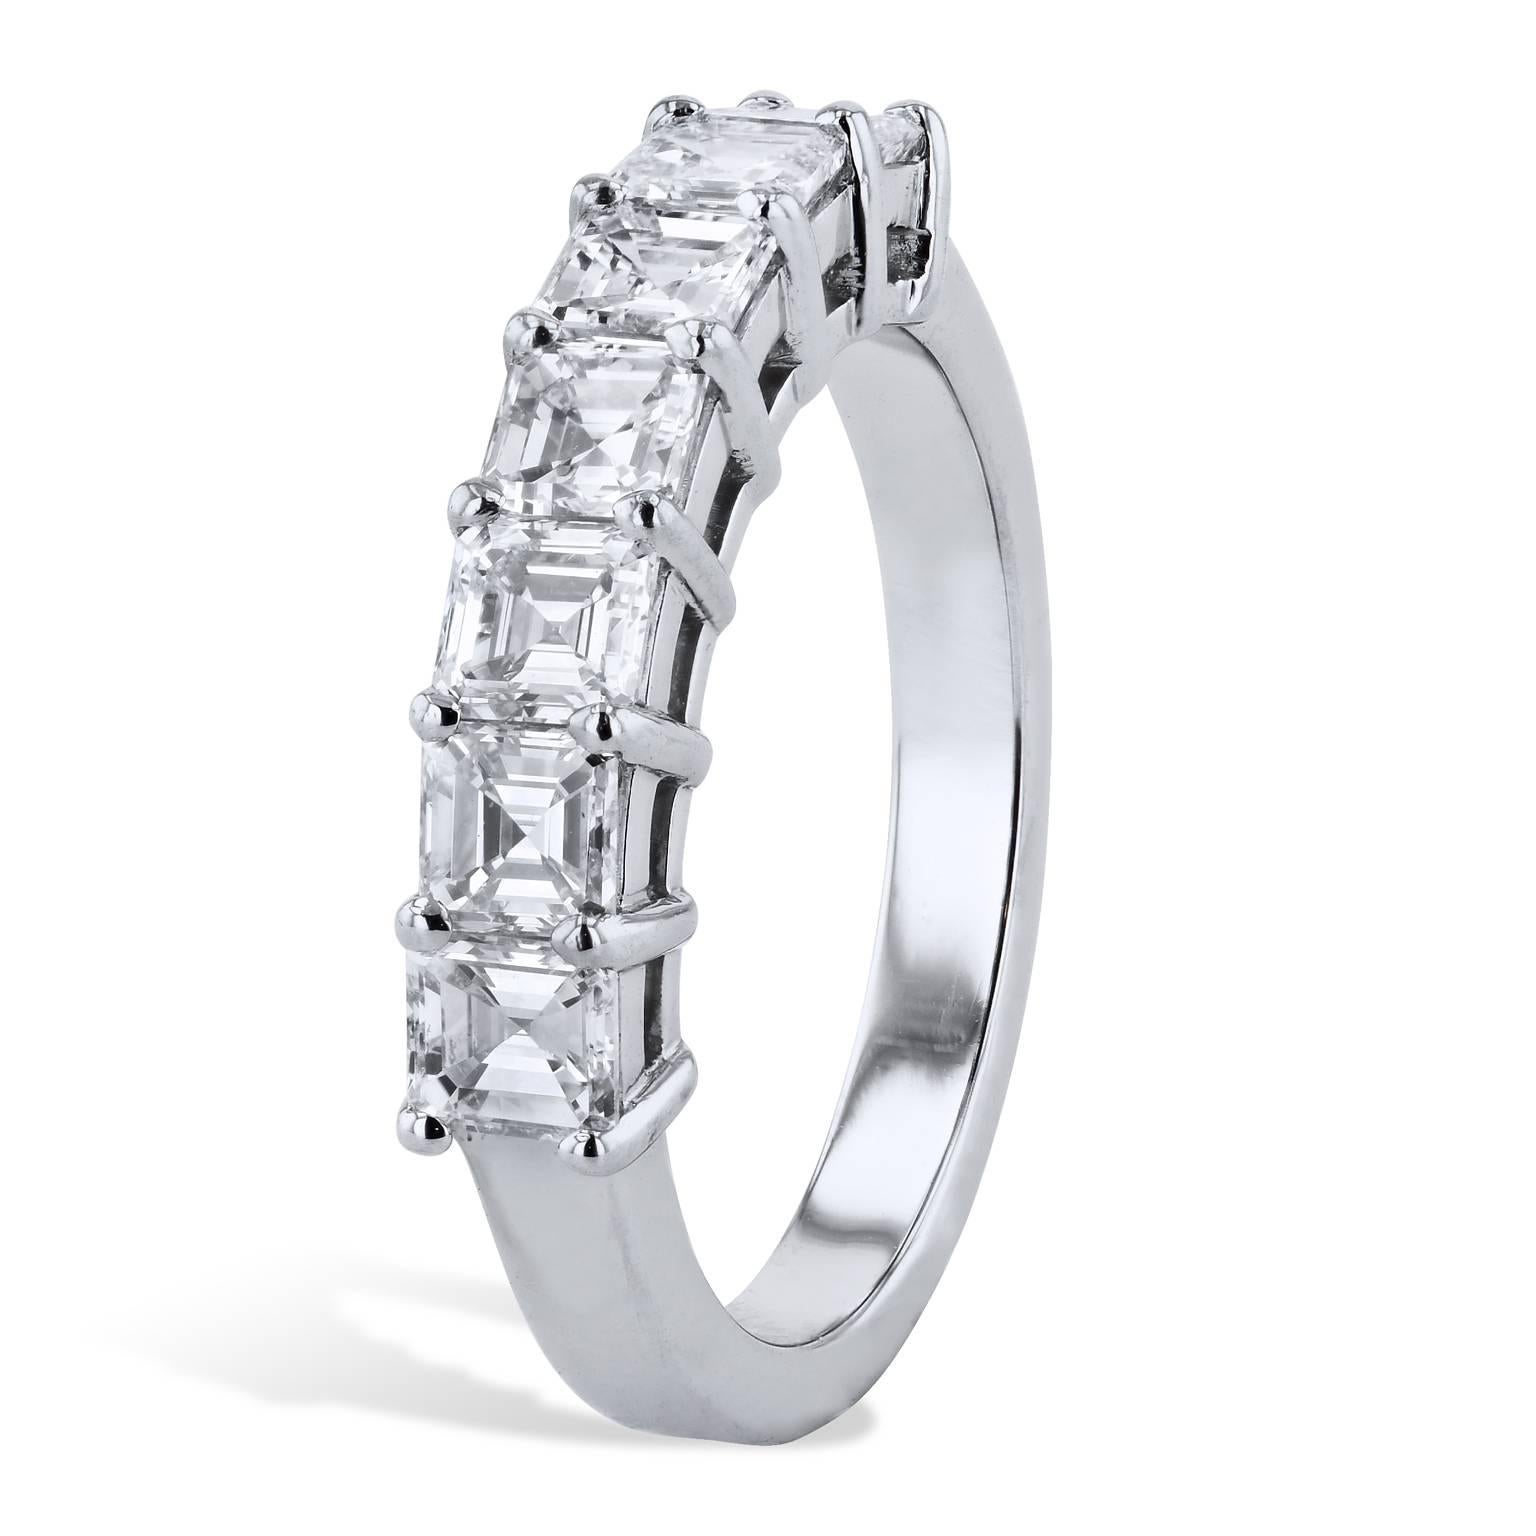 Women's 1.12 Carat Square Emerald Cut Diamond Band Ring